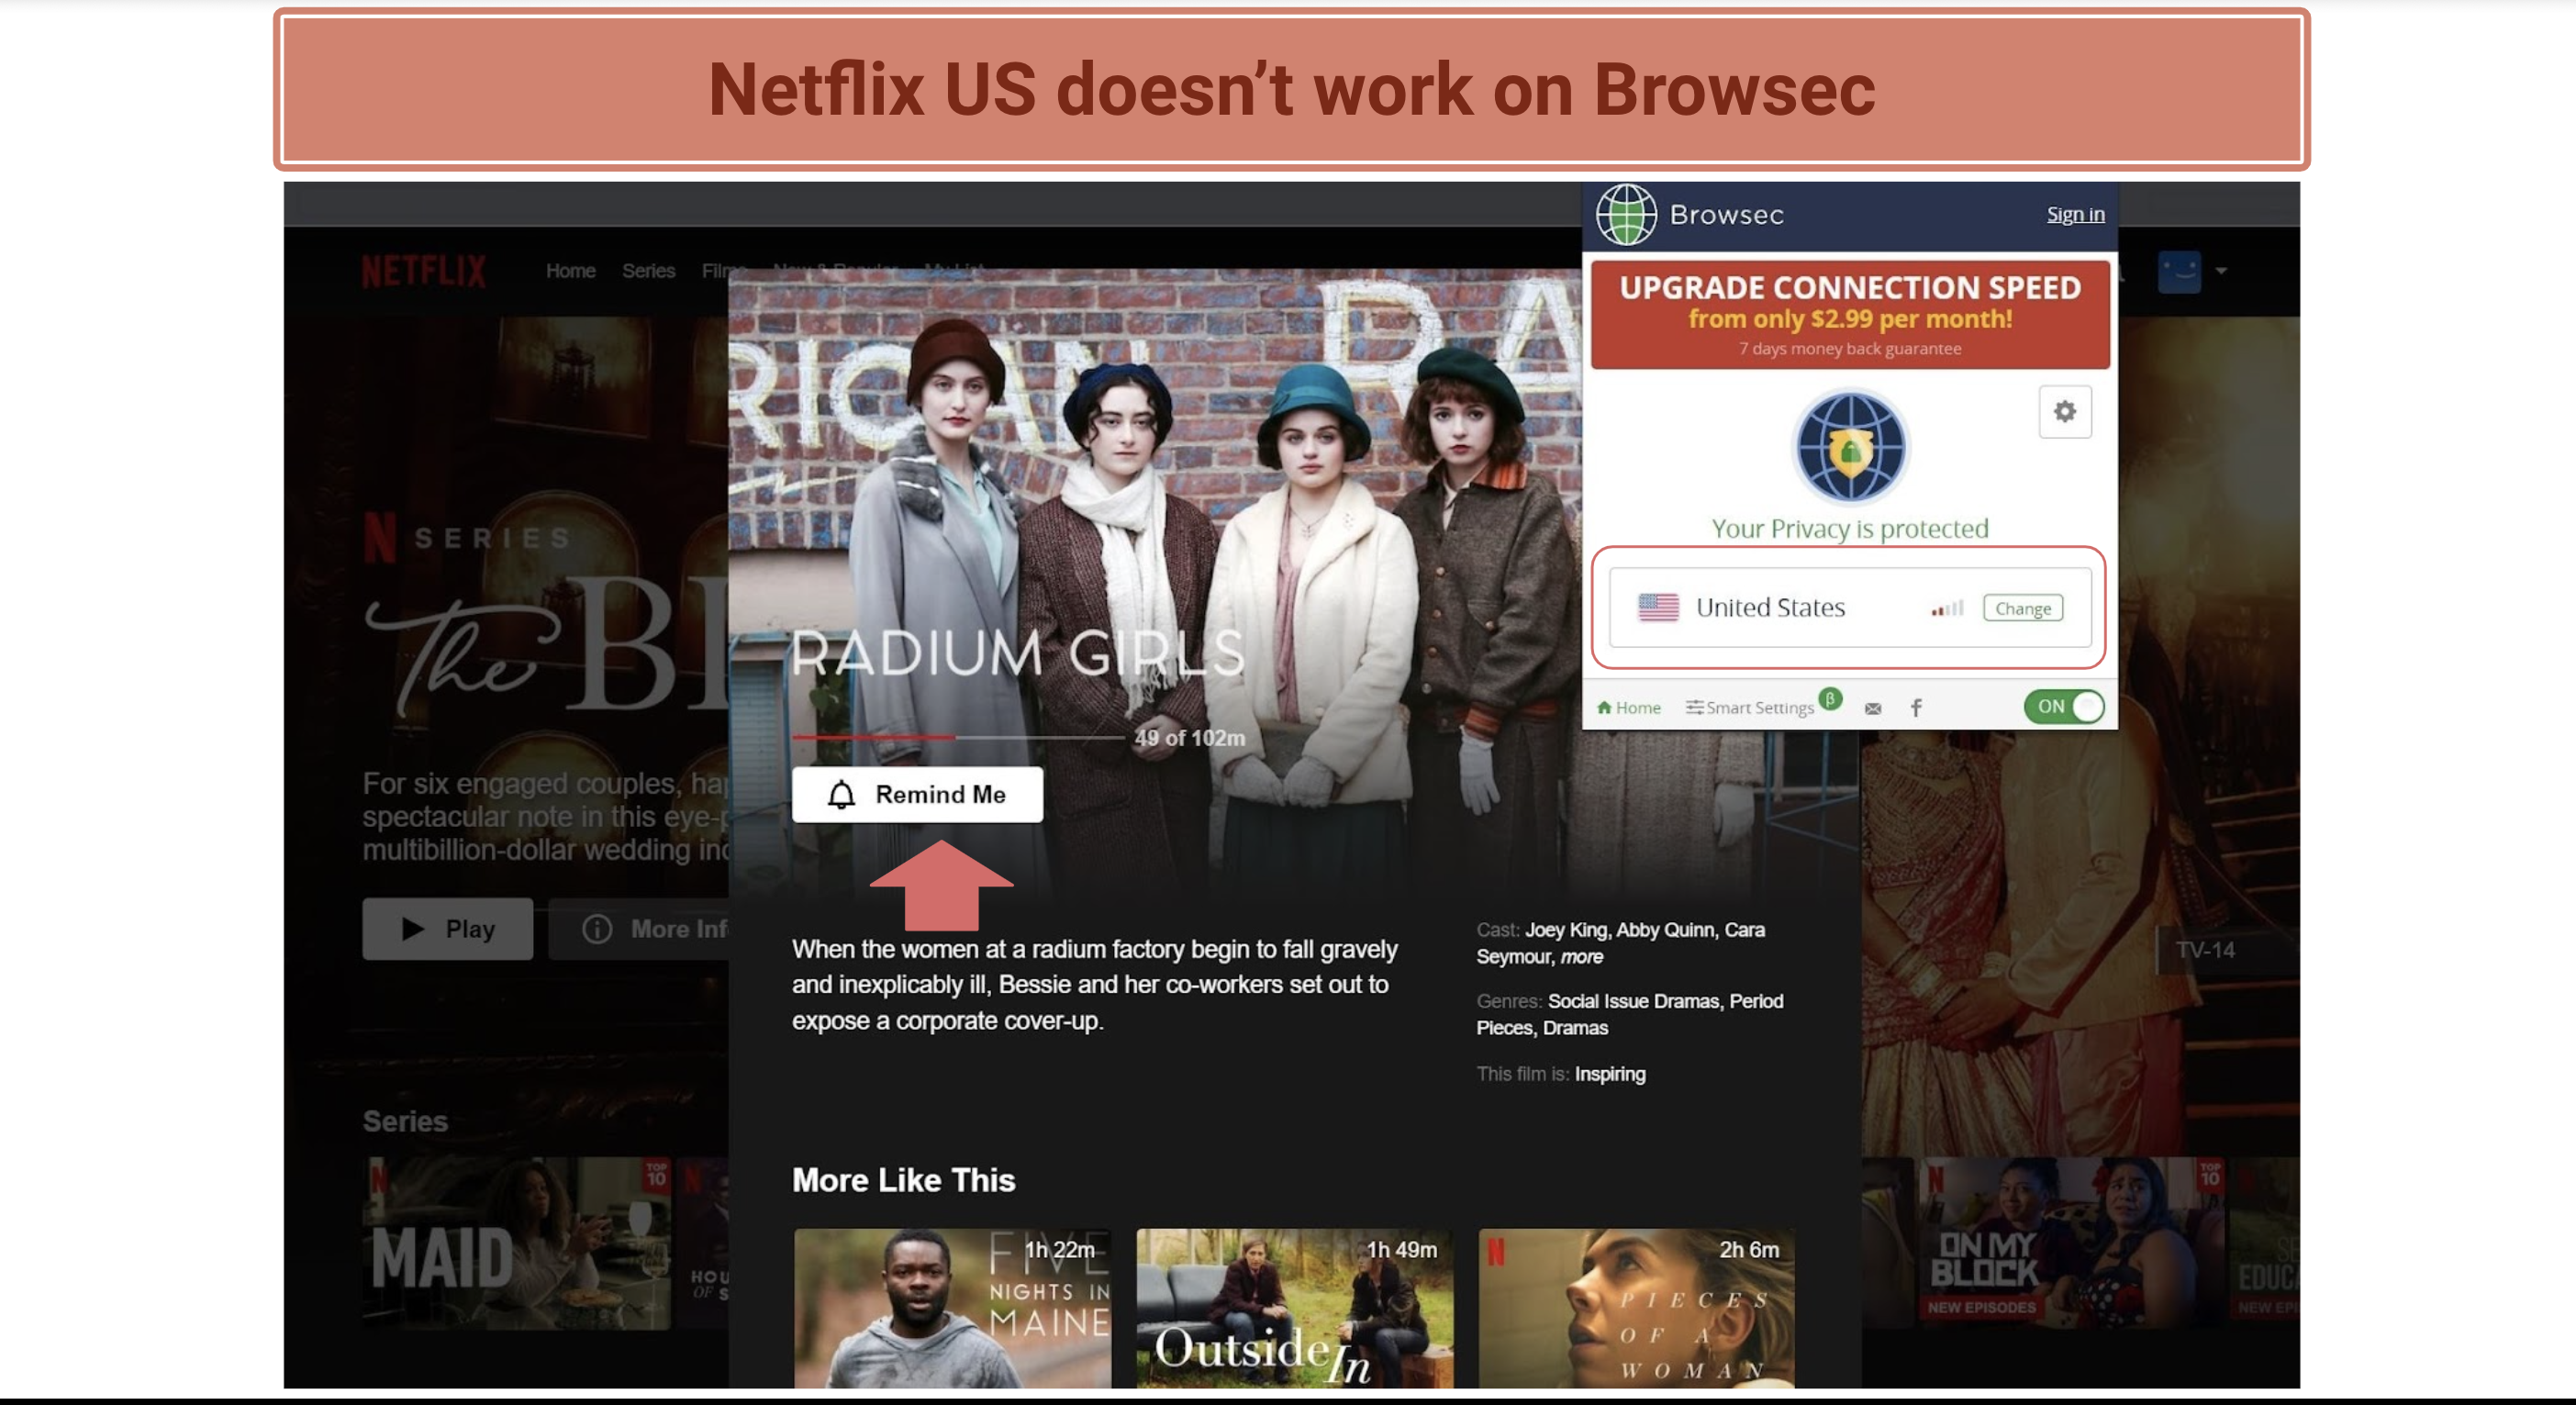  Screenshot of Netflix US not working on Browsec